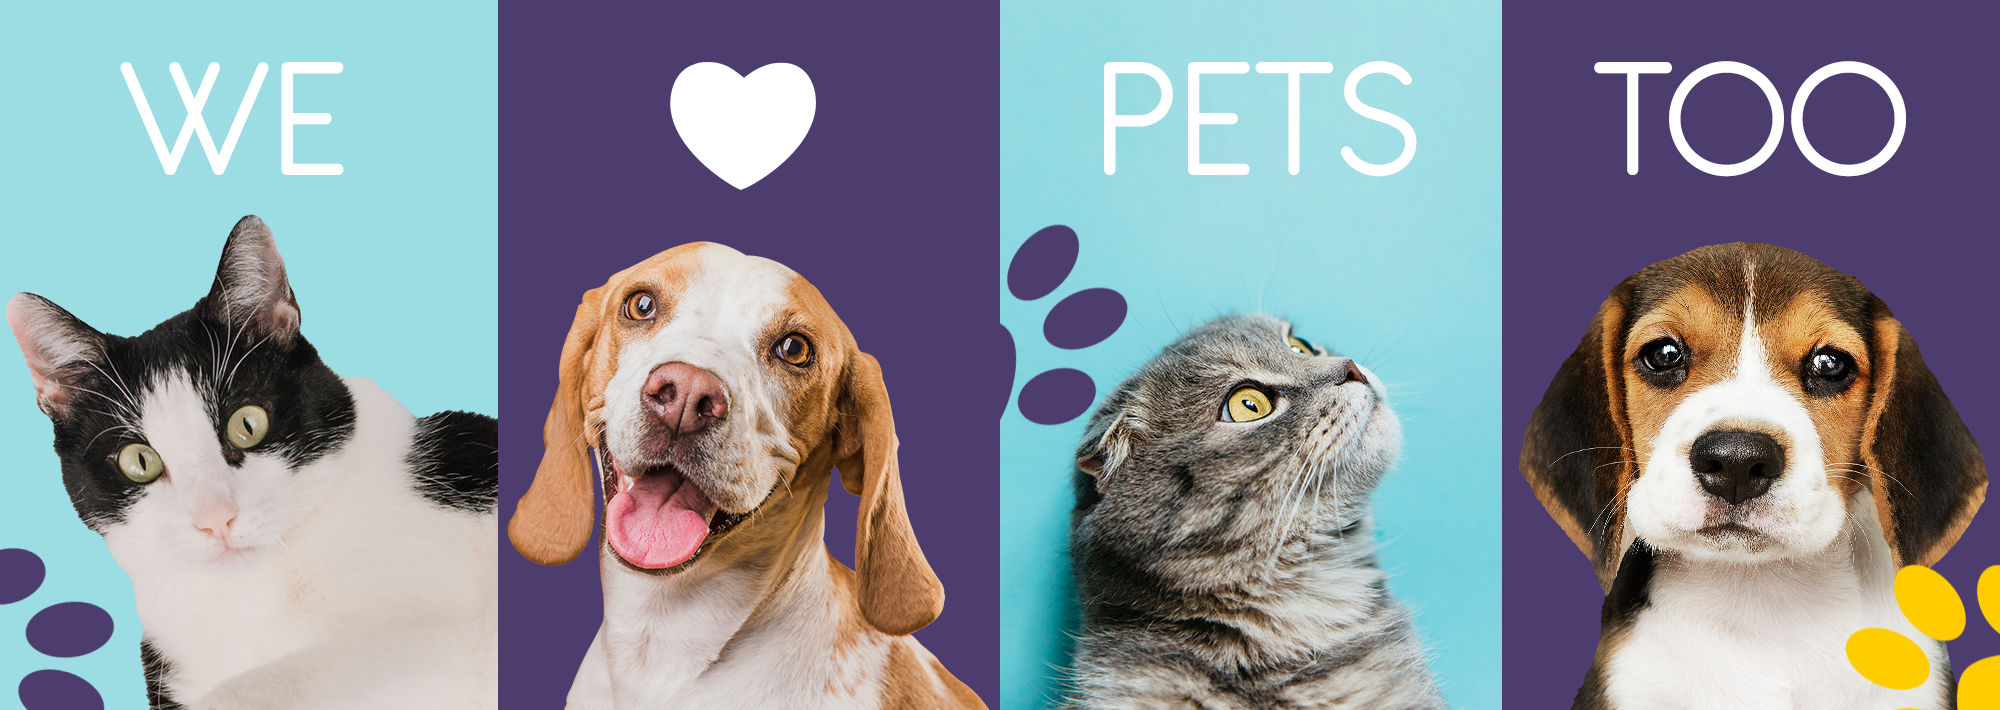 we love pets image